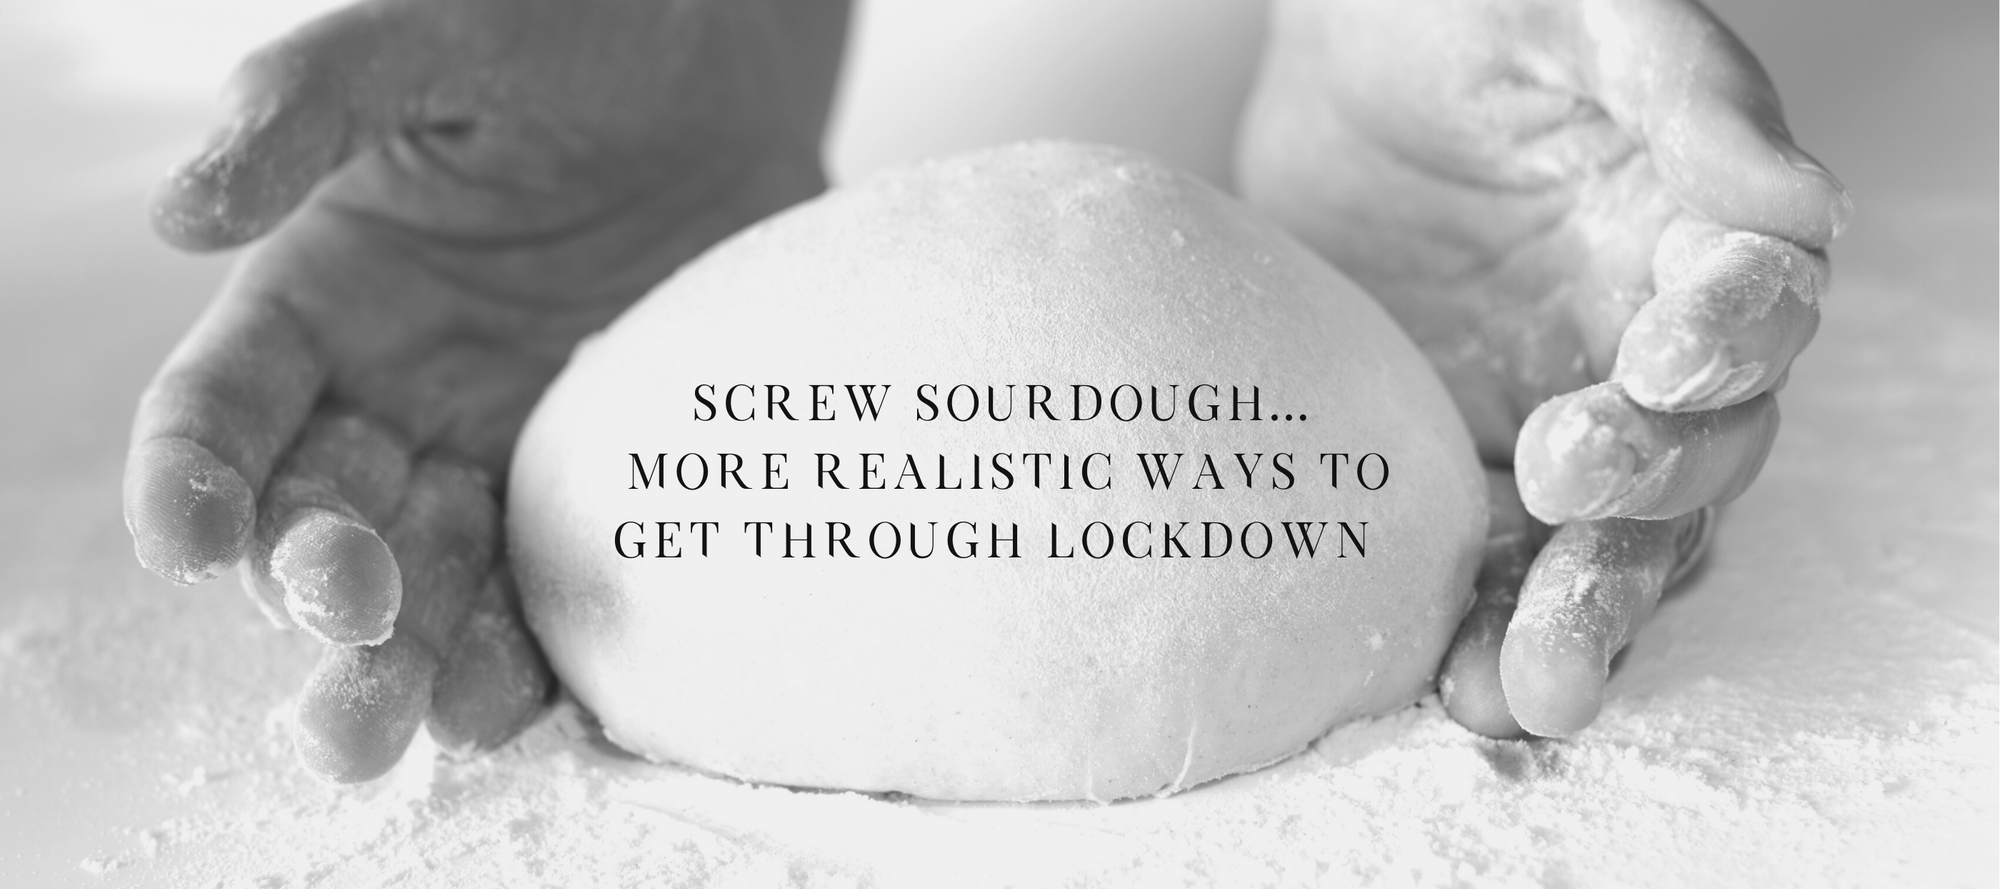 Screw sourdough. Some realistic ways to get through lockdown (again).